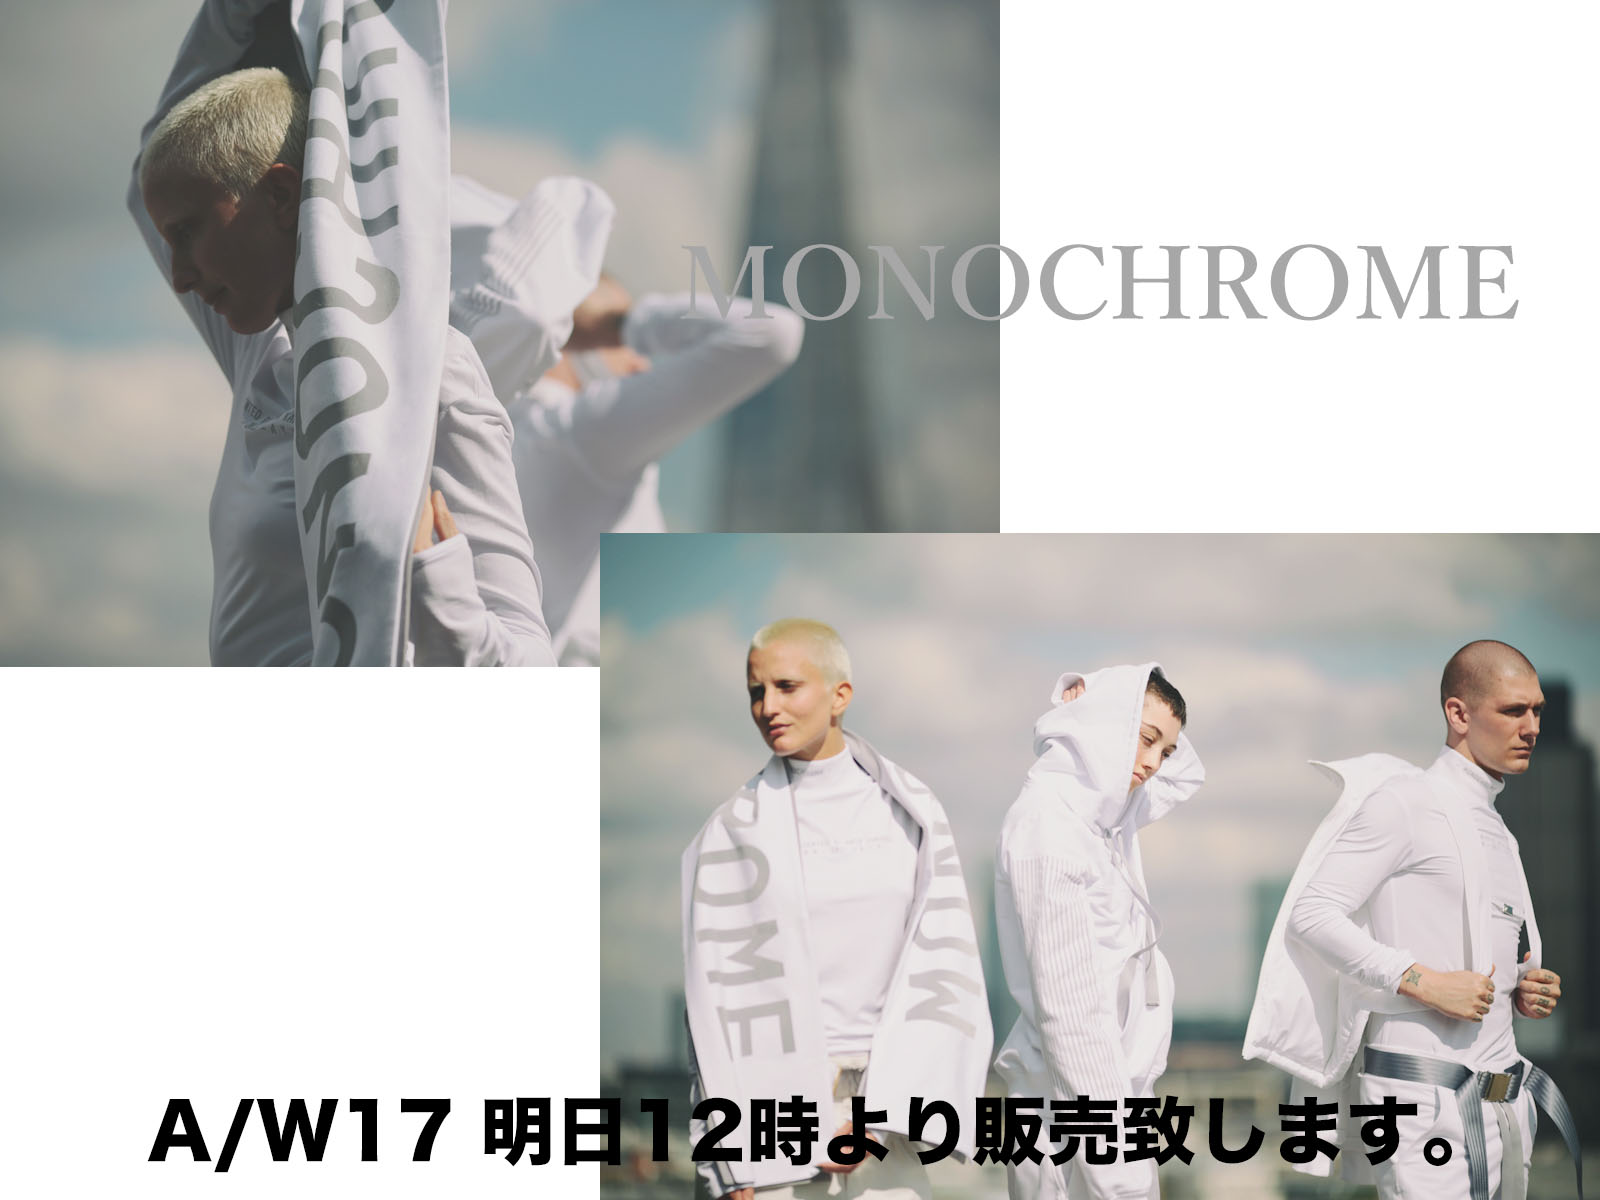 MONOCHROME A/W 2017 7/29(土) 販売スタート